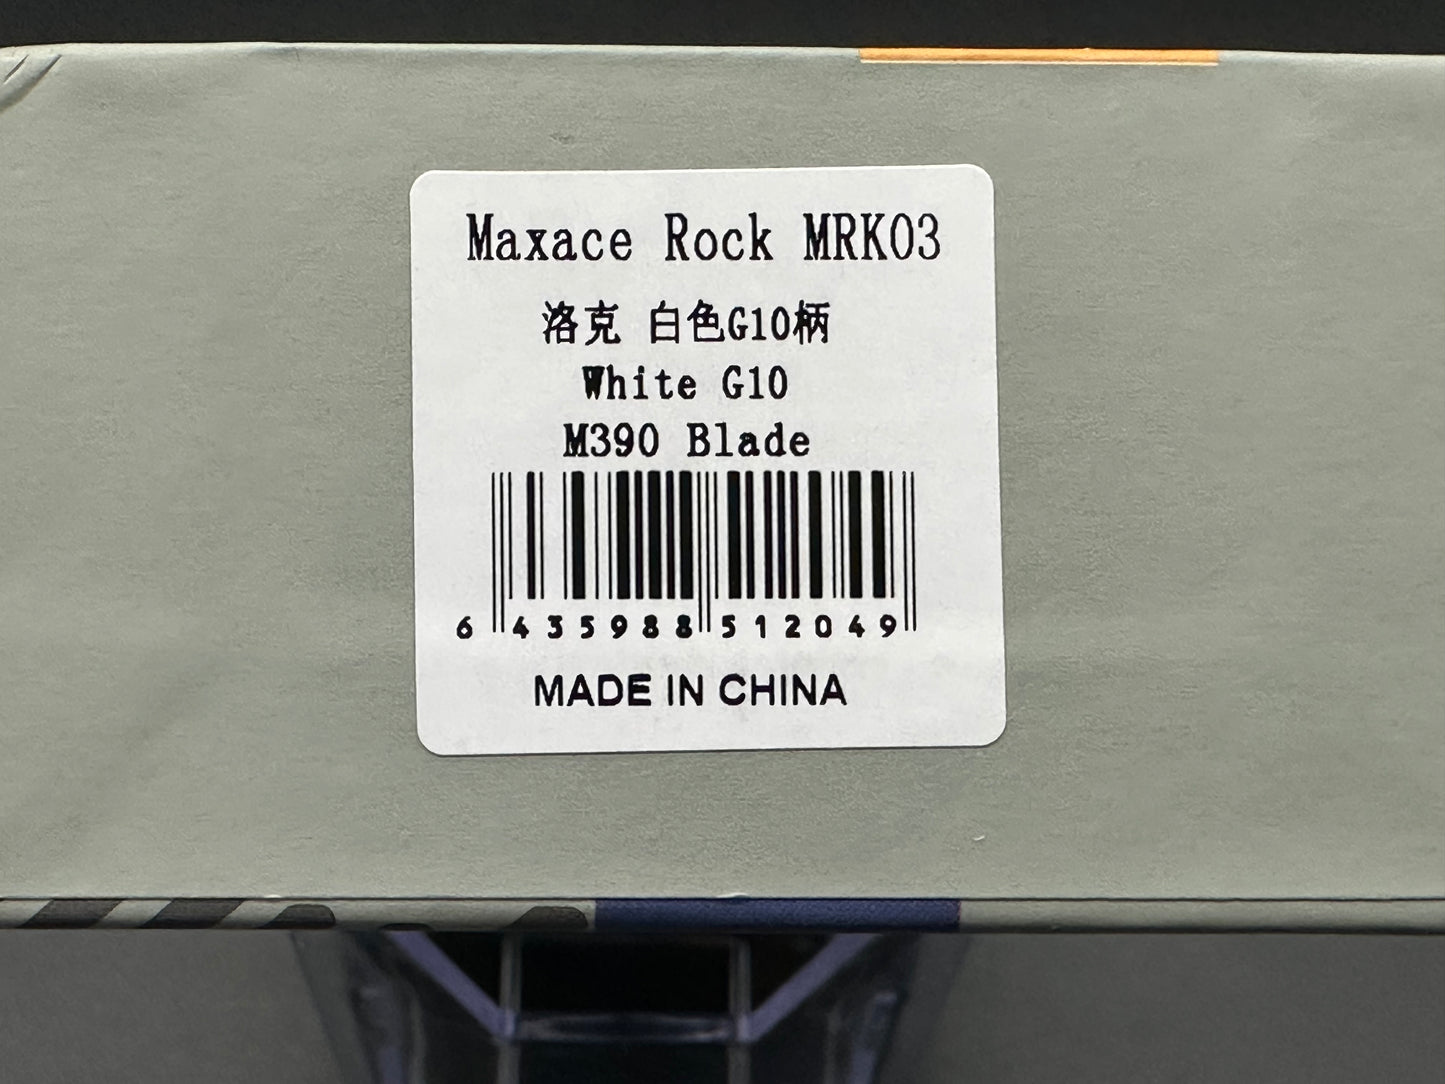 Maxace Rock